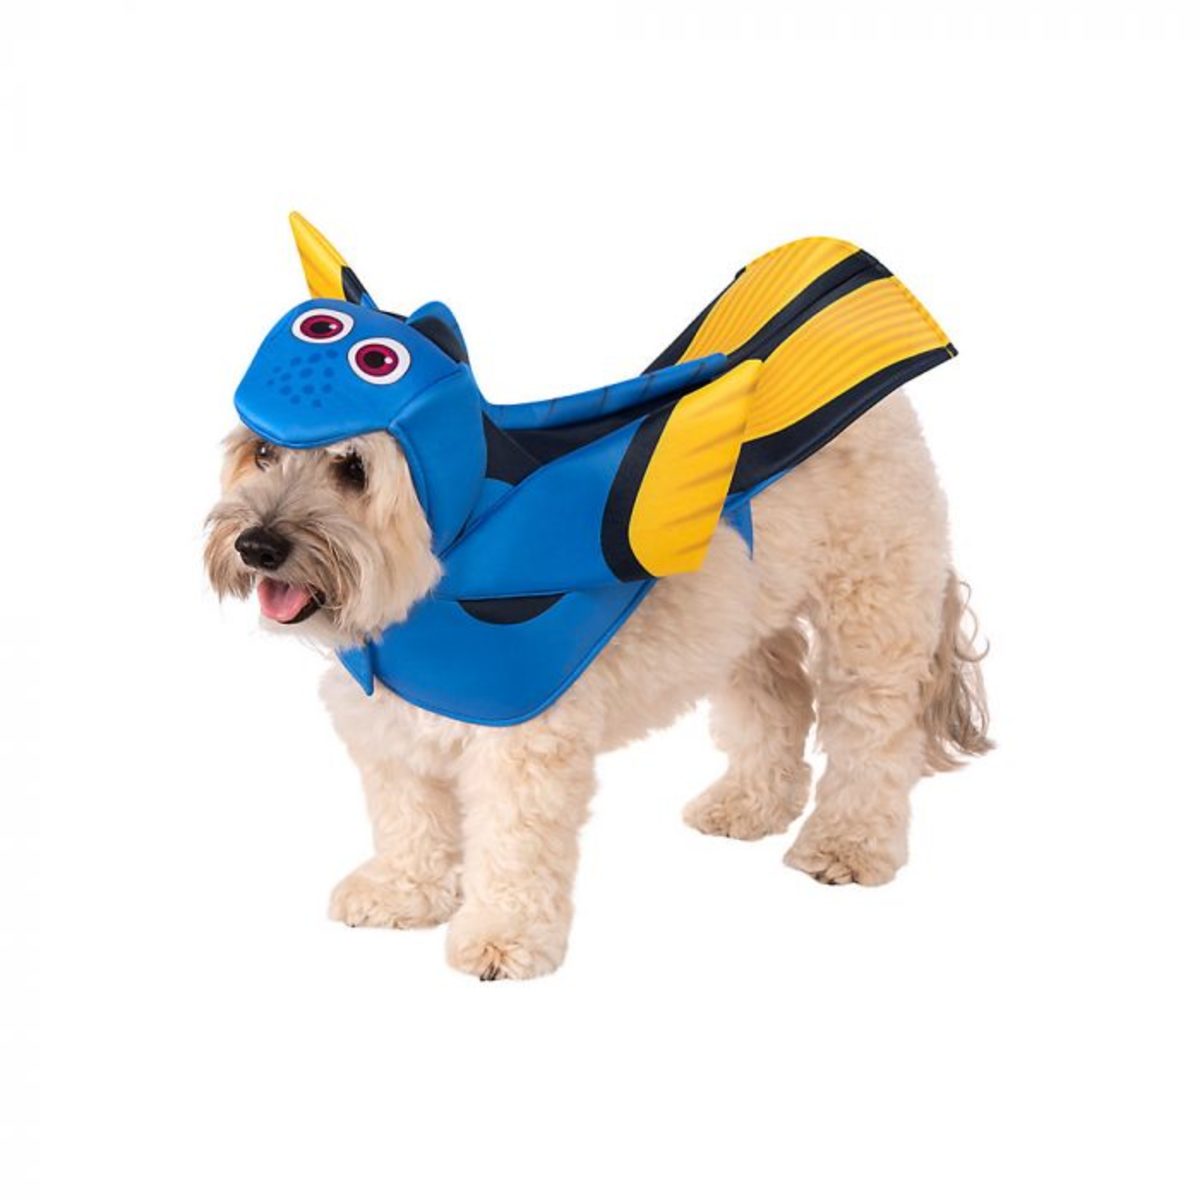 Finding Nemo Dory Dog Halloween Costume